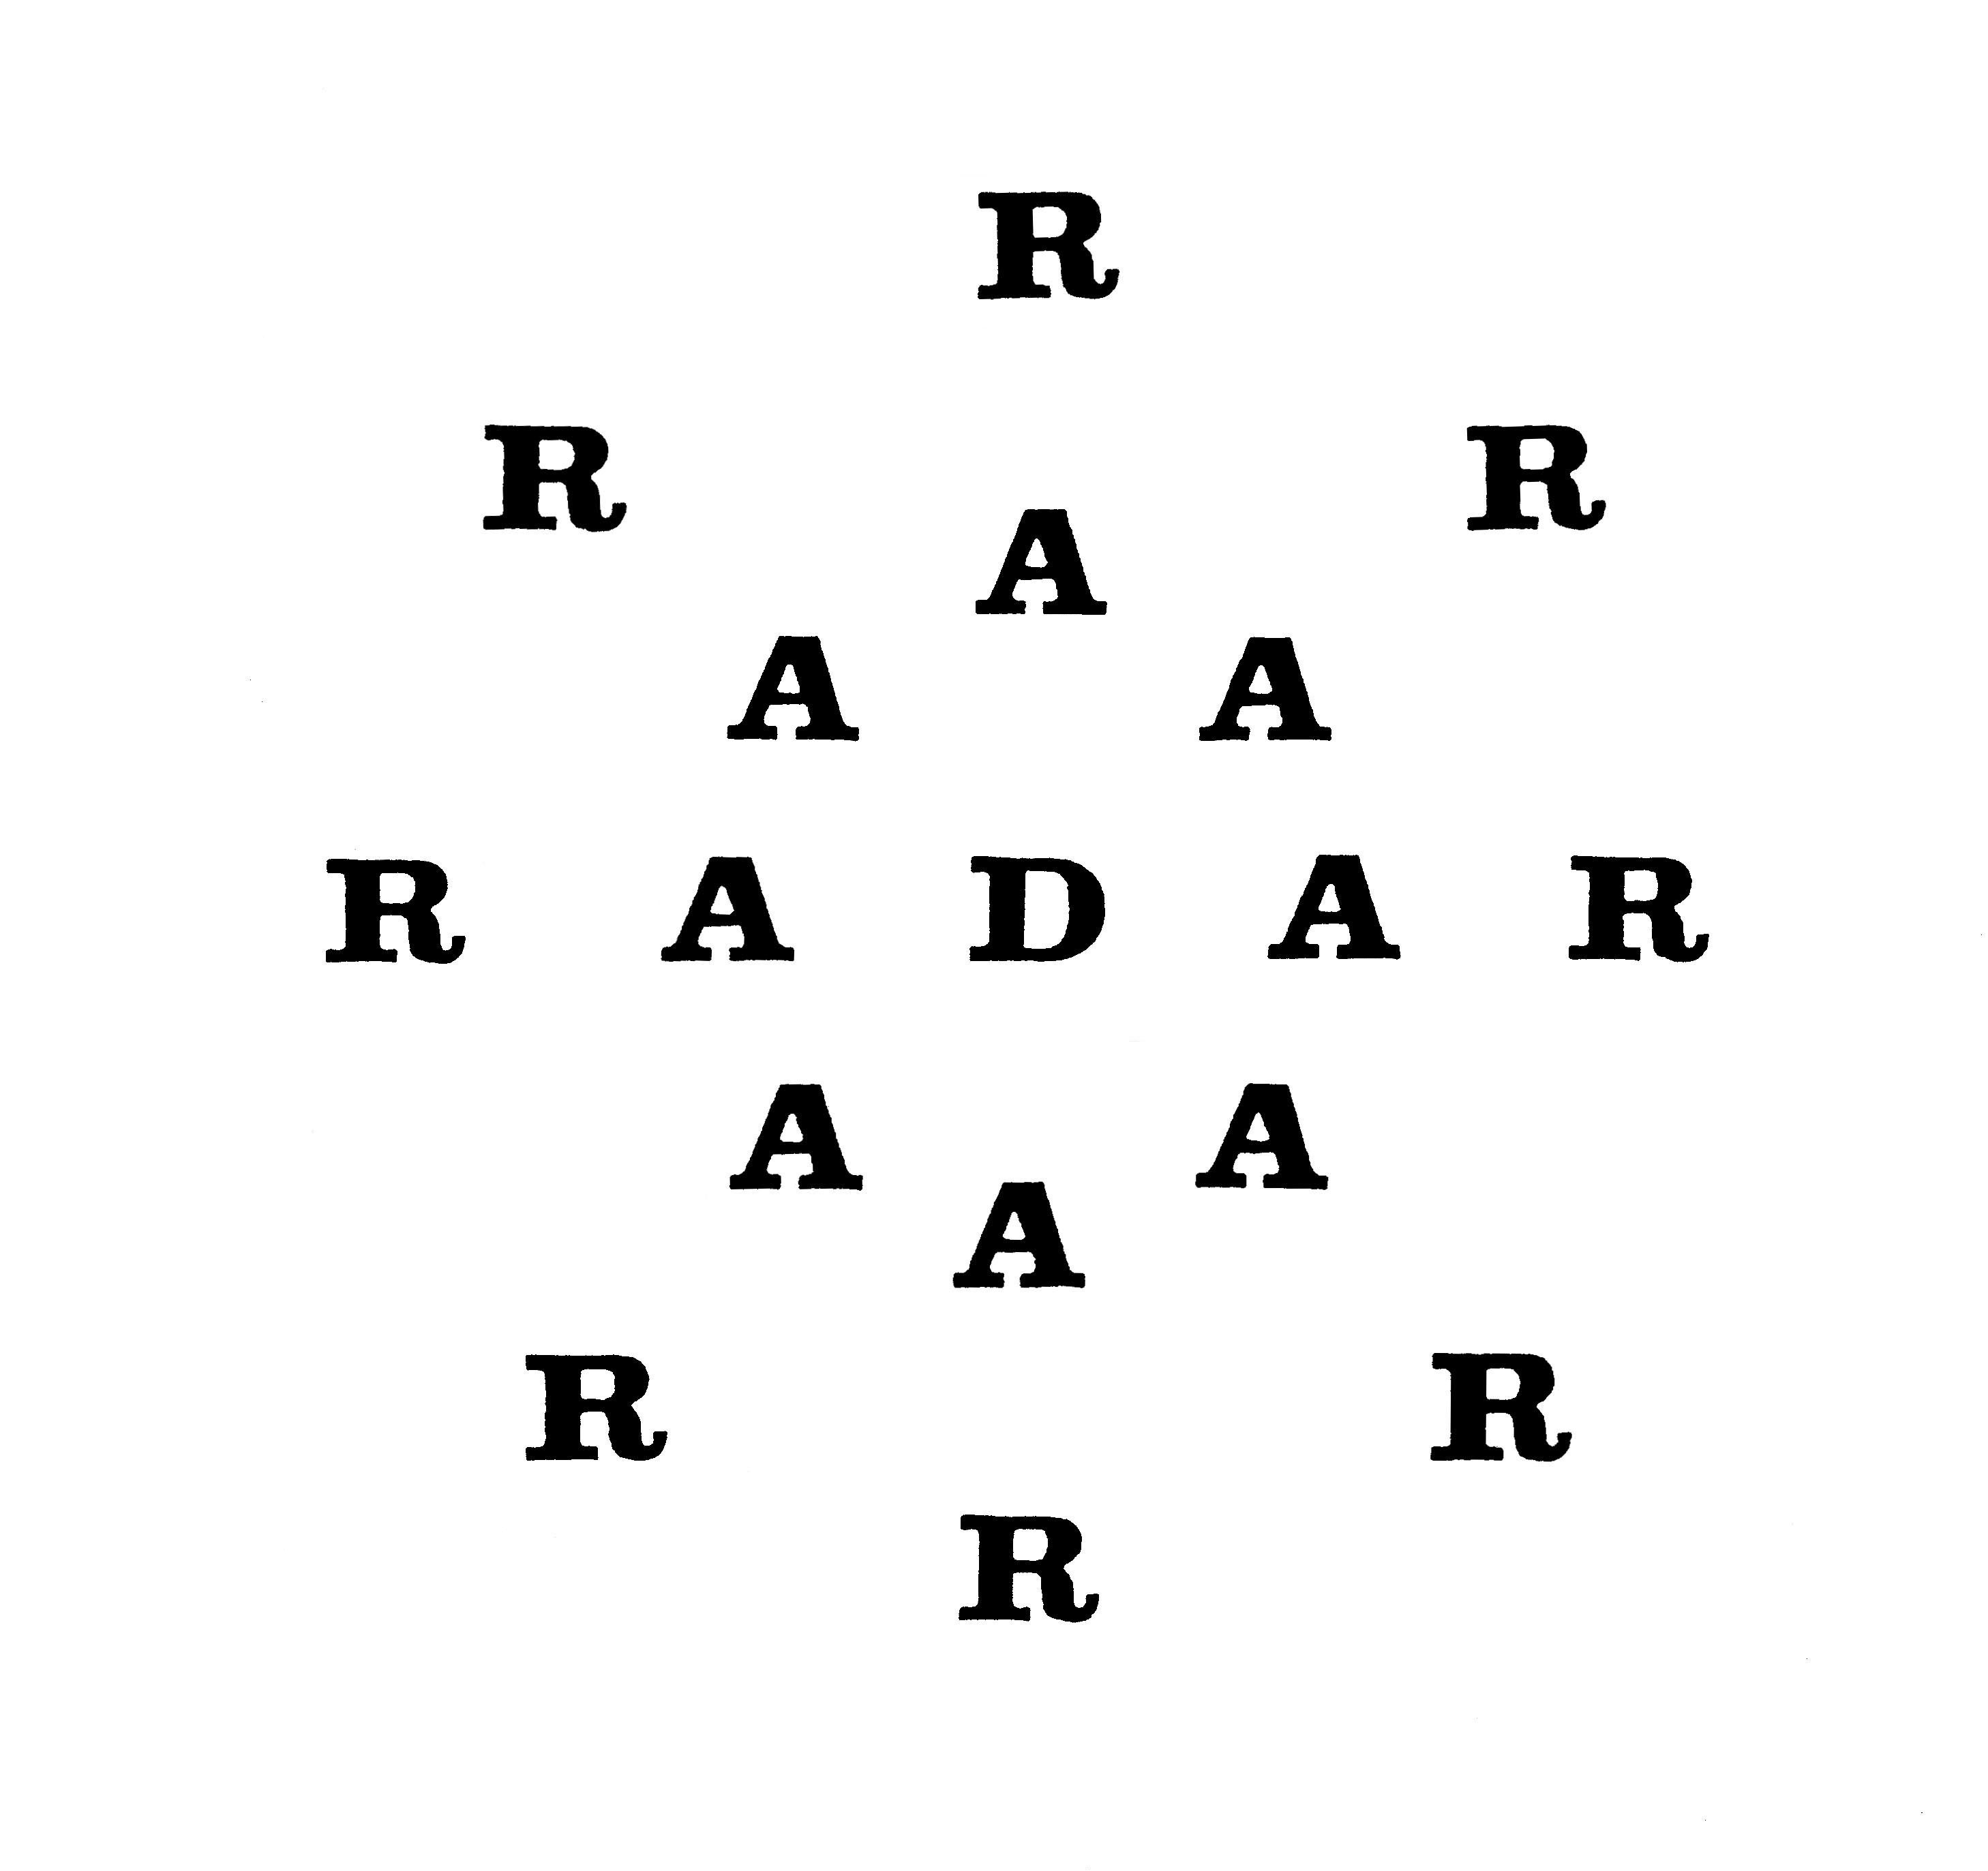 radar.jpg